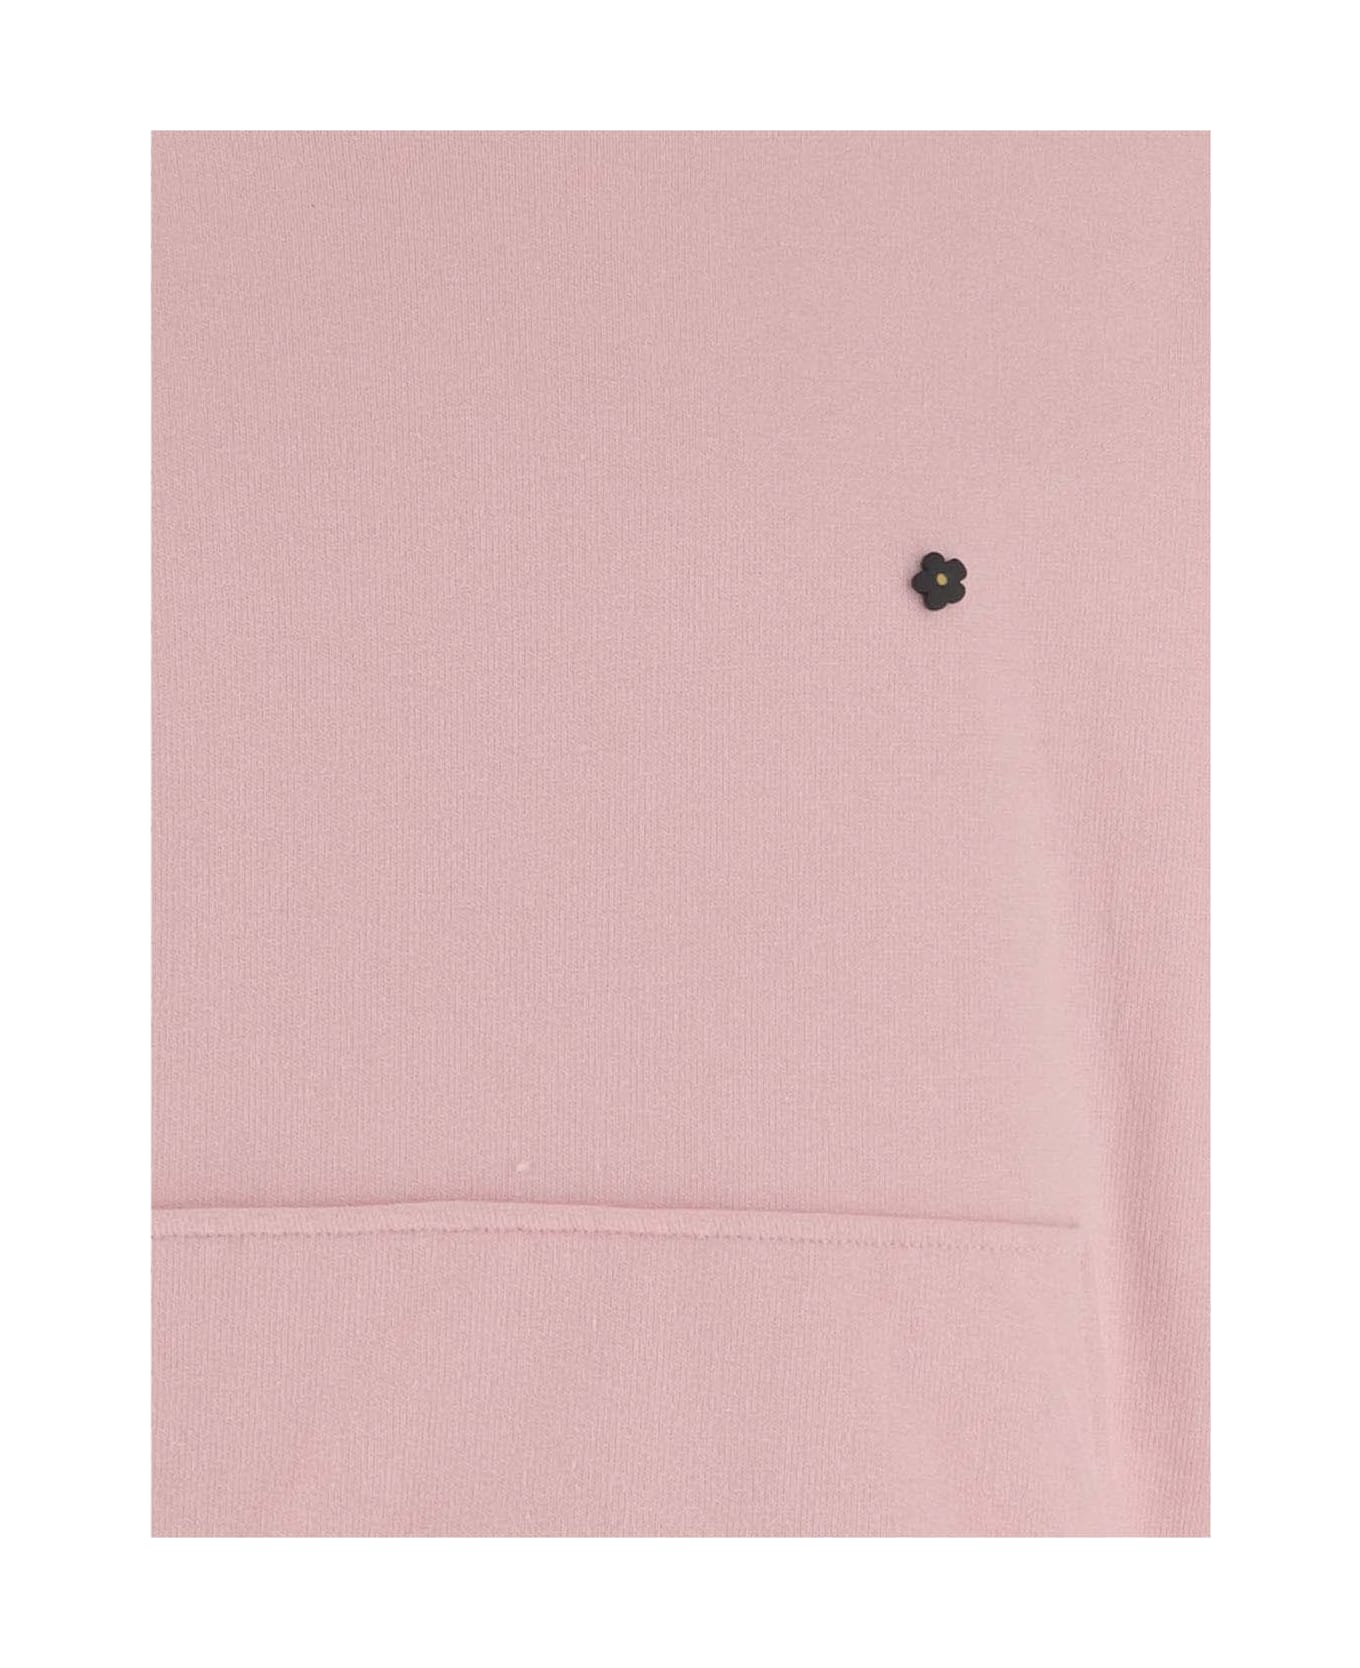 A Paper Kid Cotton Sweatshirt With Logo - Pink